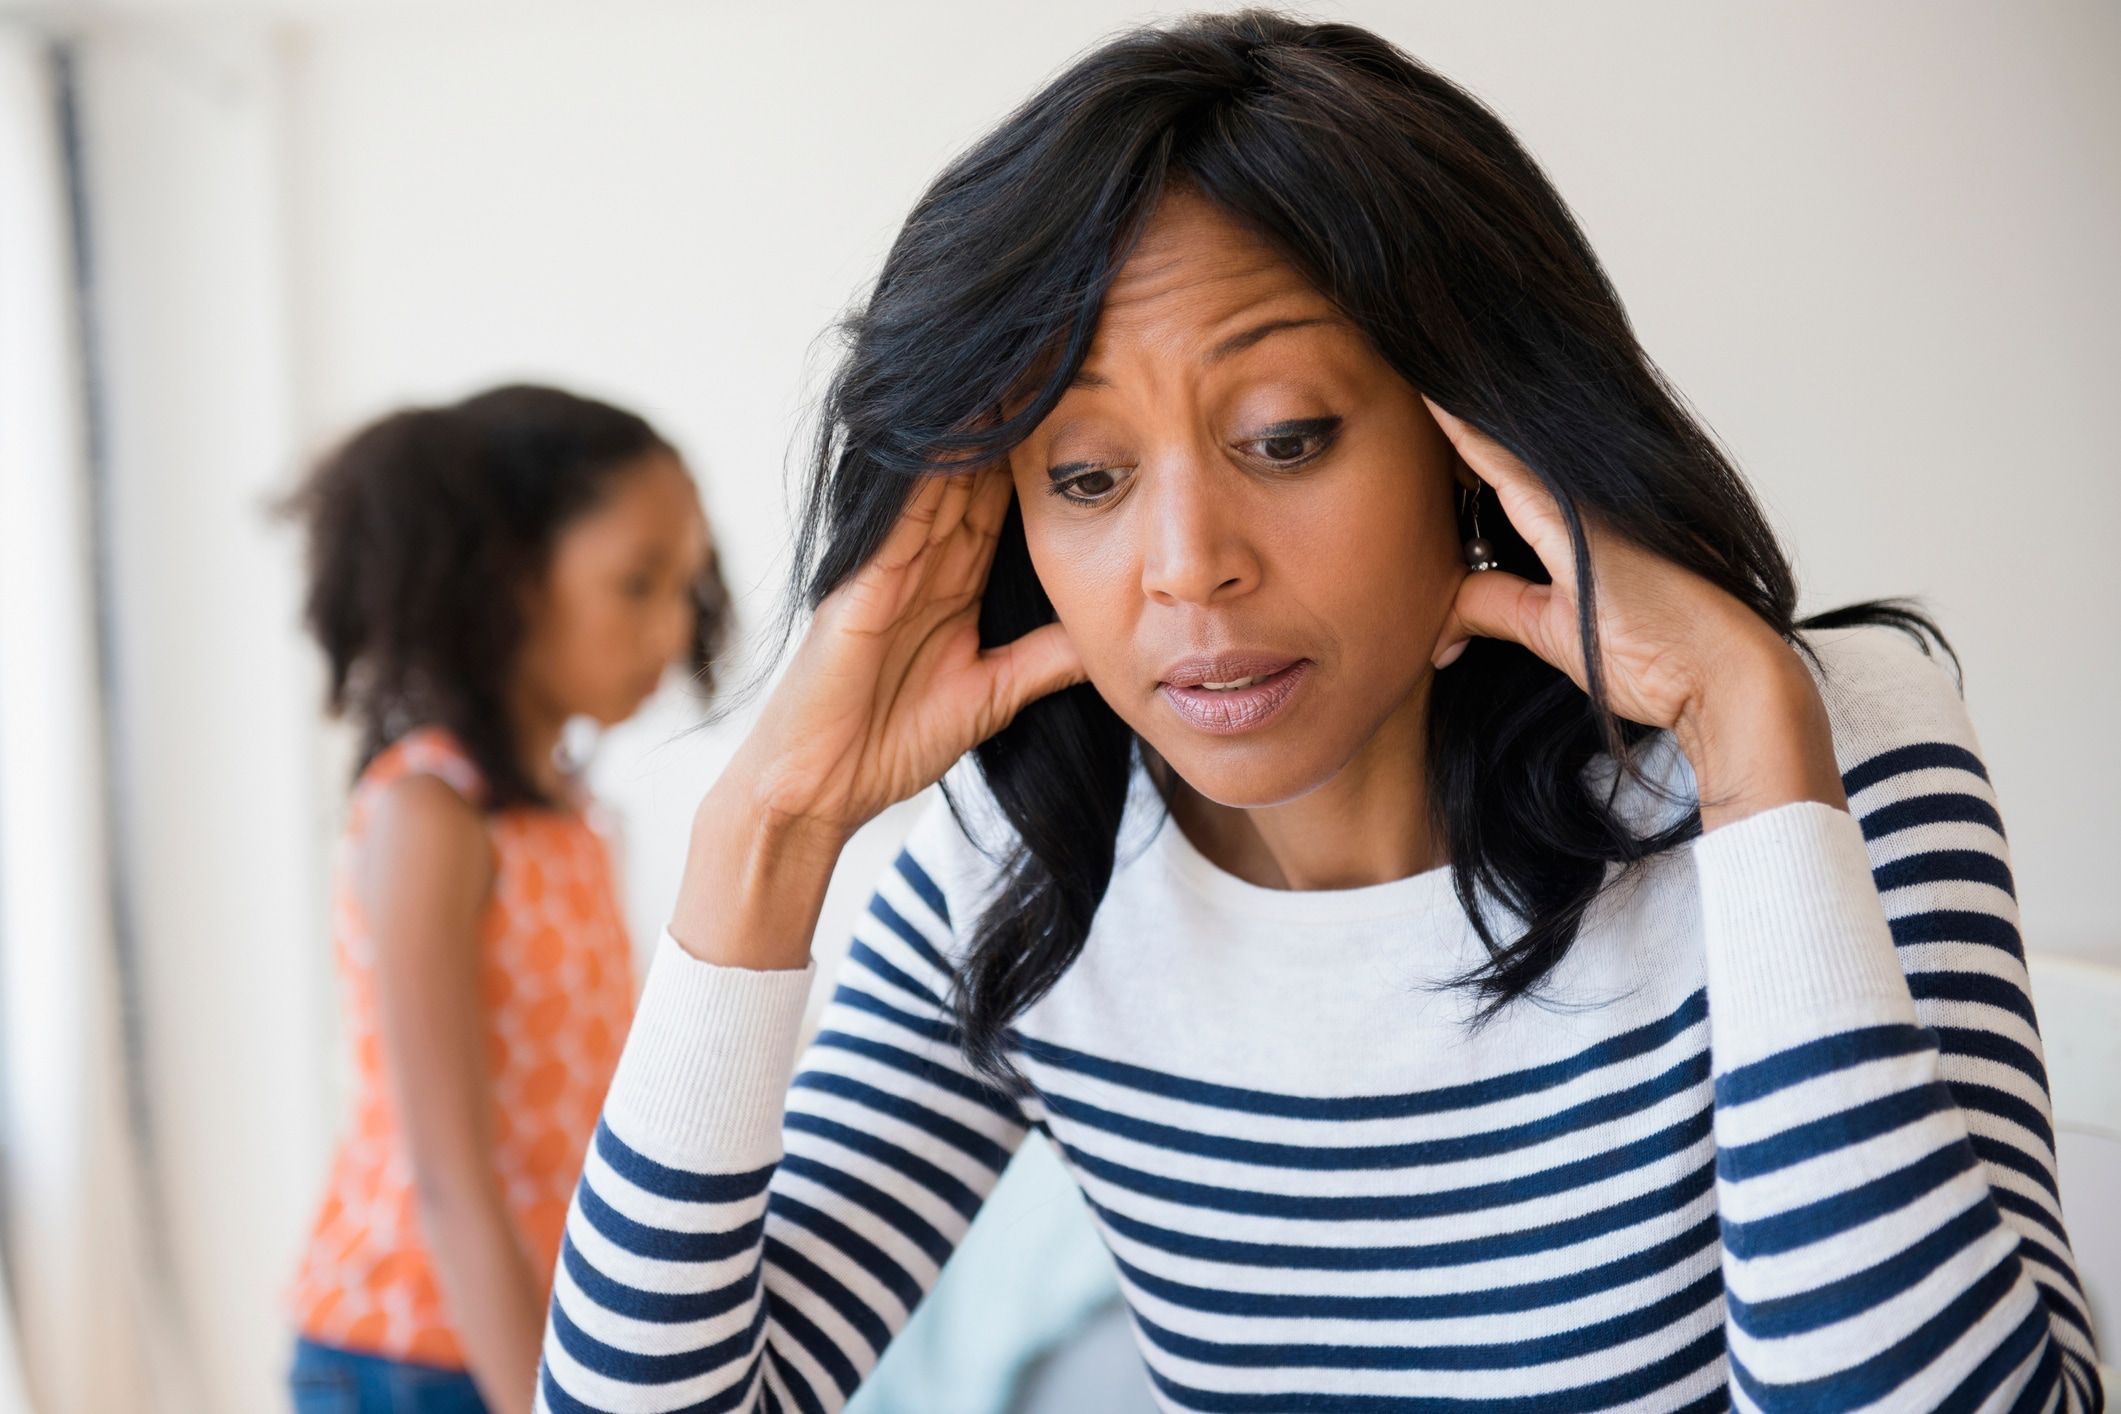 7 ways parents can manage anxiety amid coronavirus